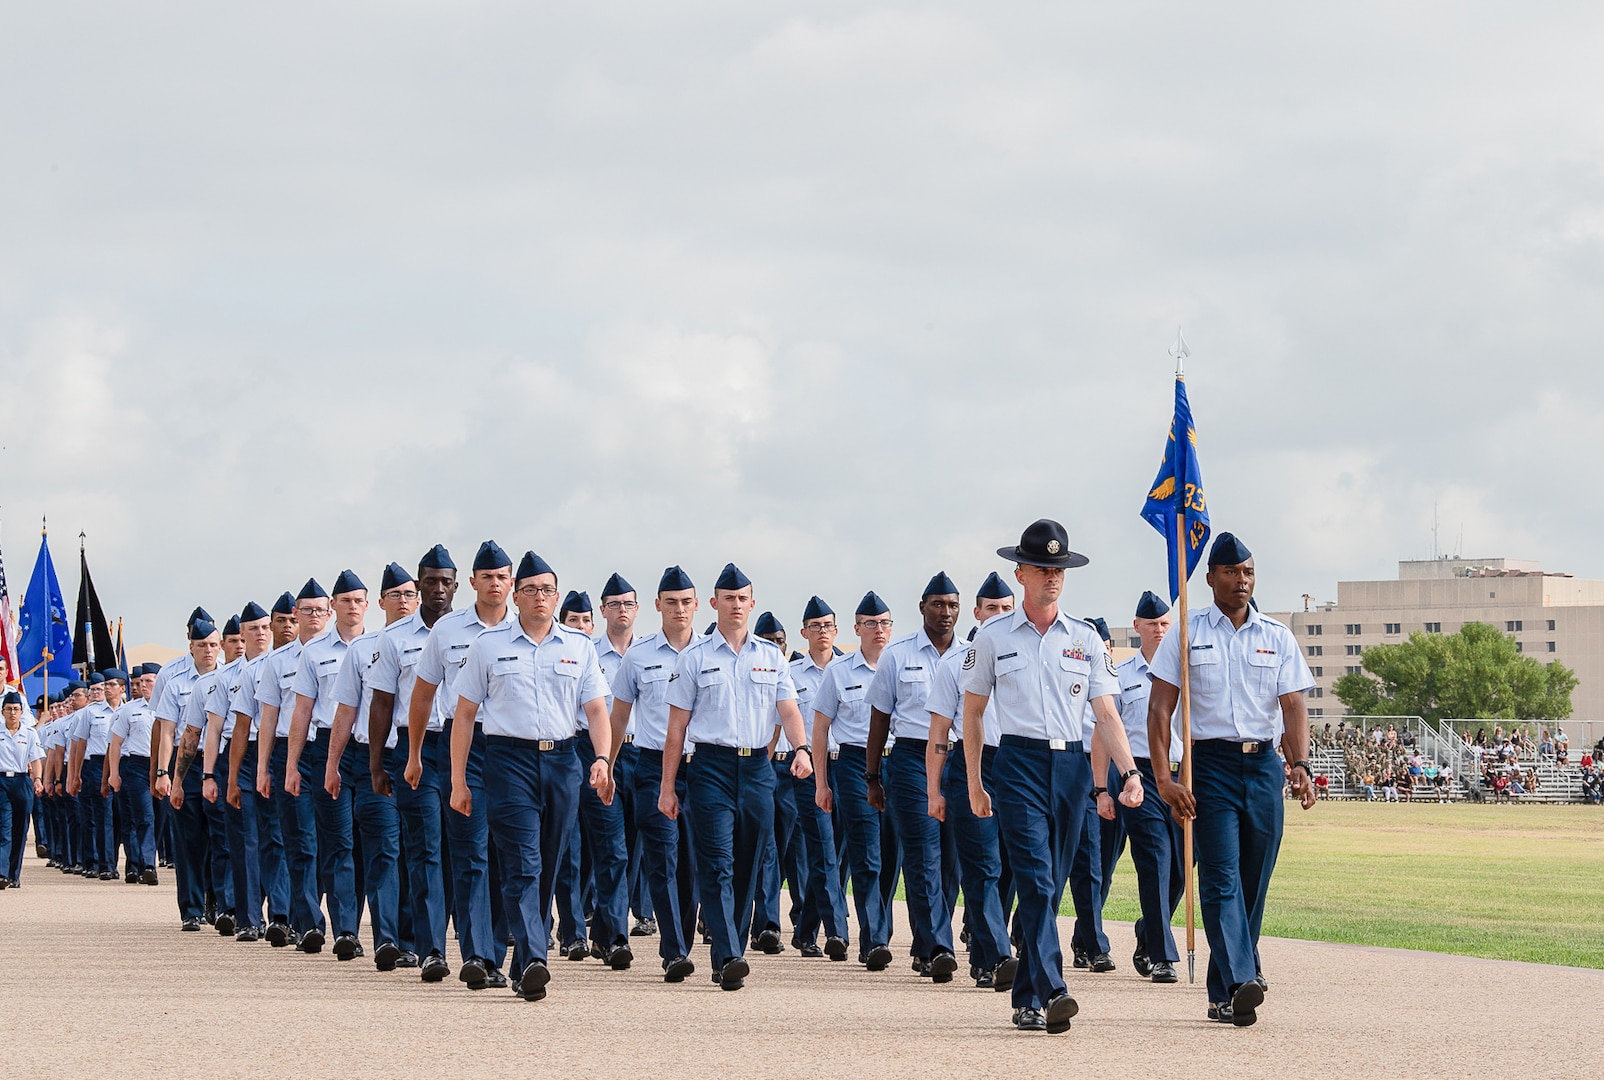 Effective June 1, First Term Airmen can retrain into AFSCs under 90% manning in lieu of separation